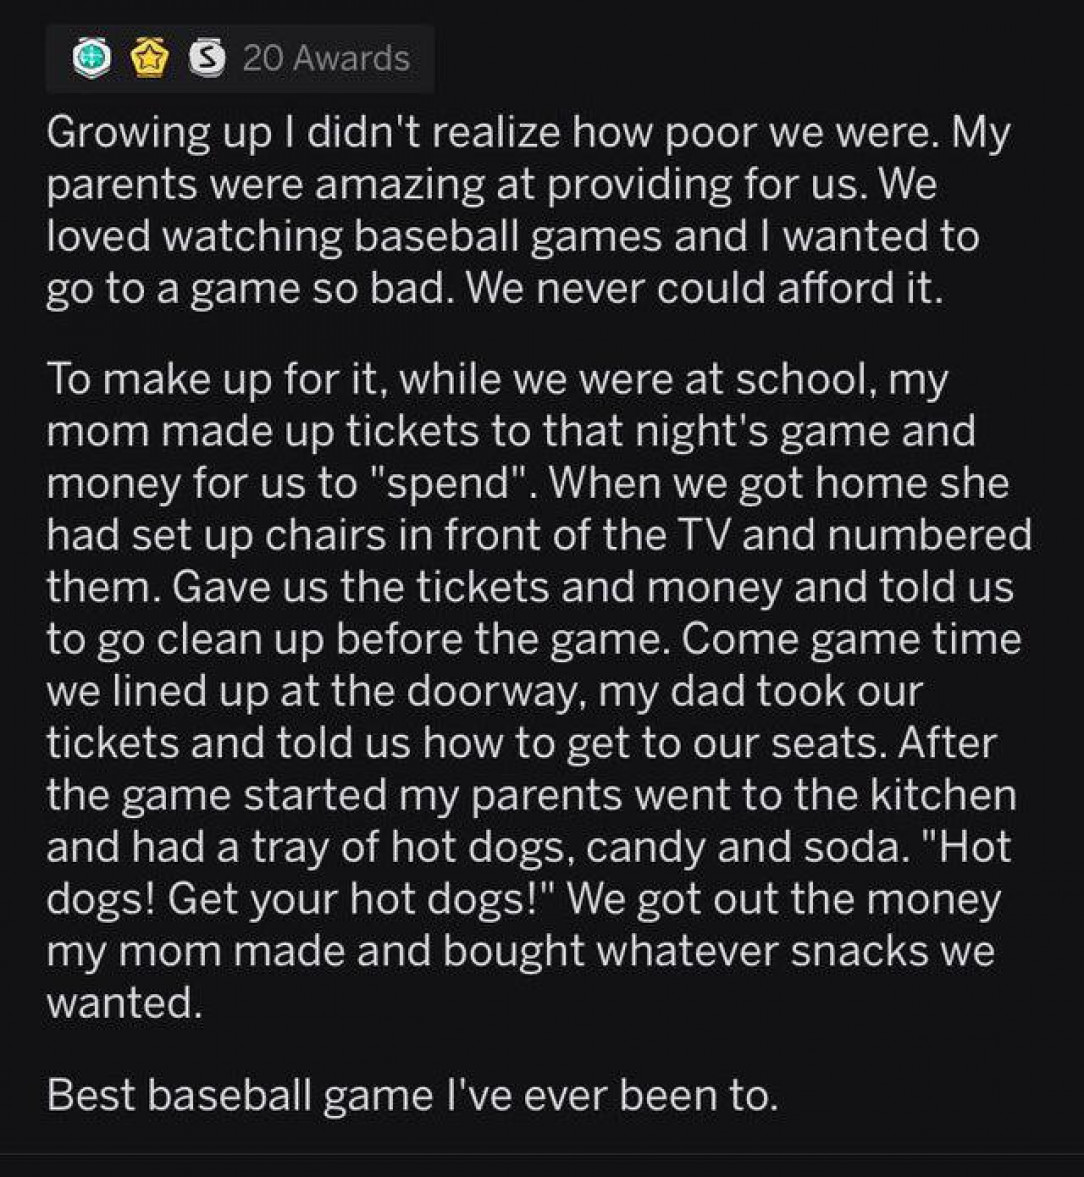 Best baseball game watch